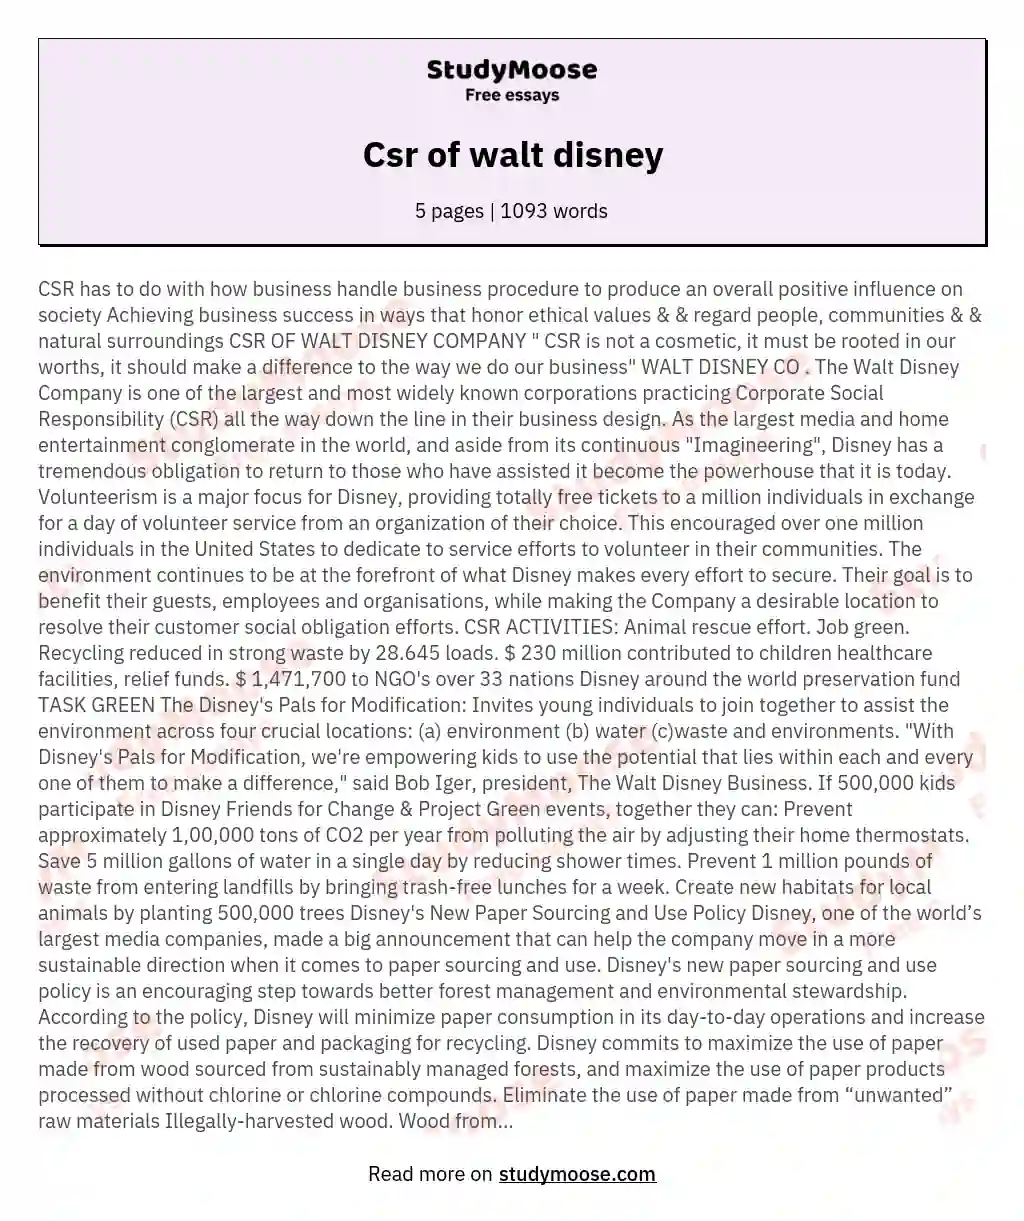 Csr of walt disney